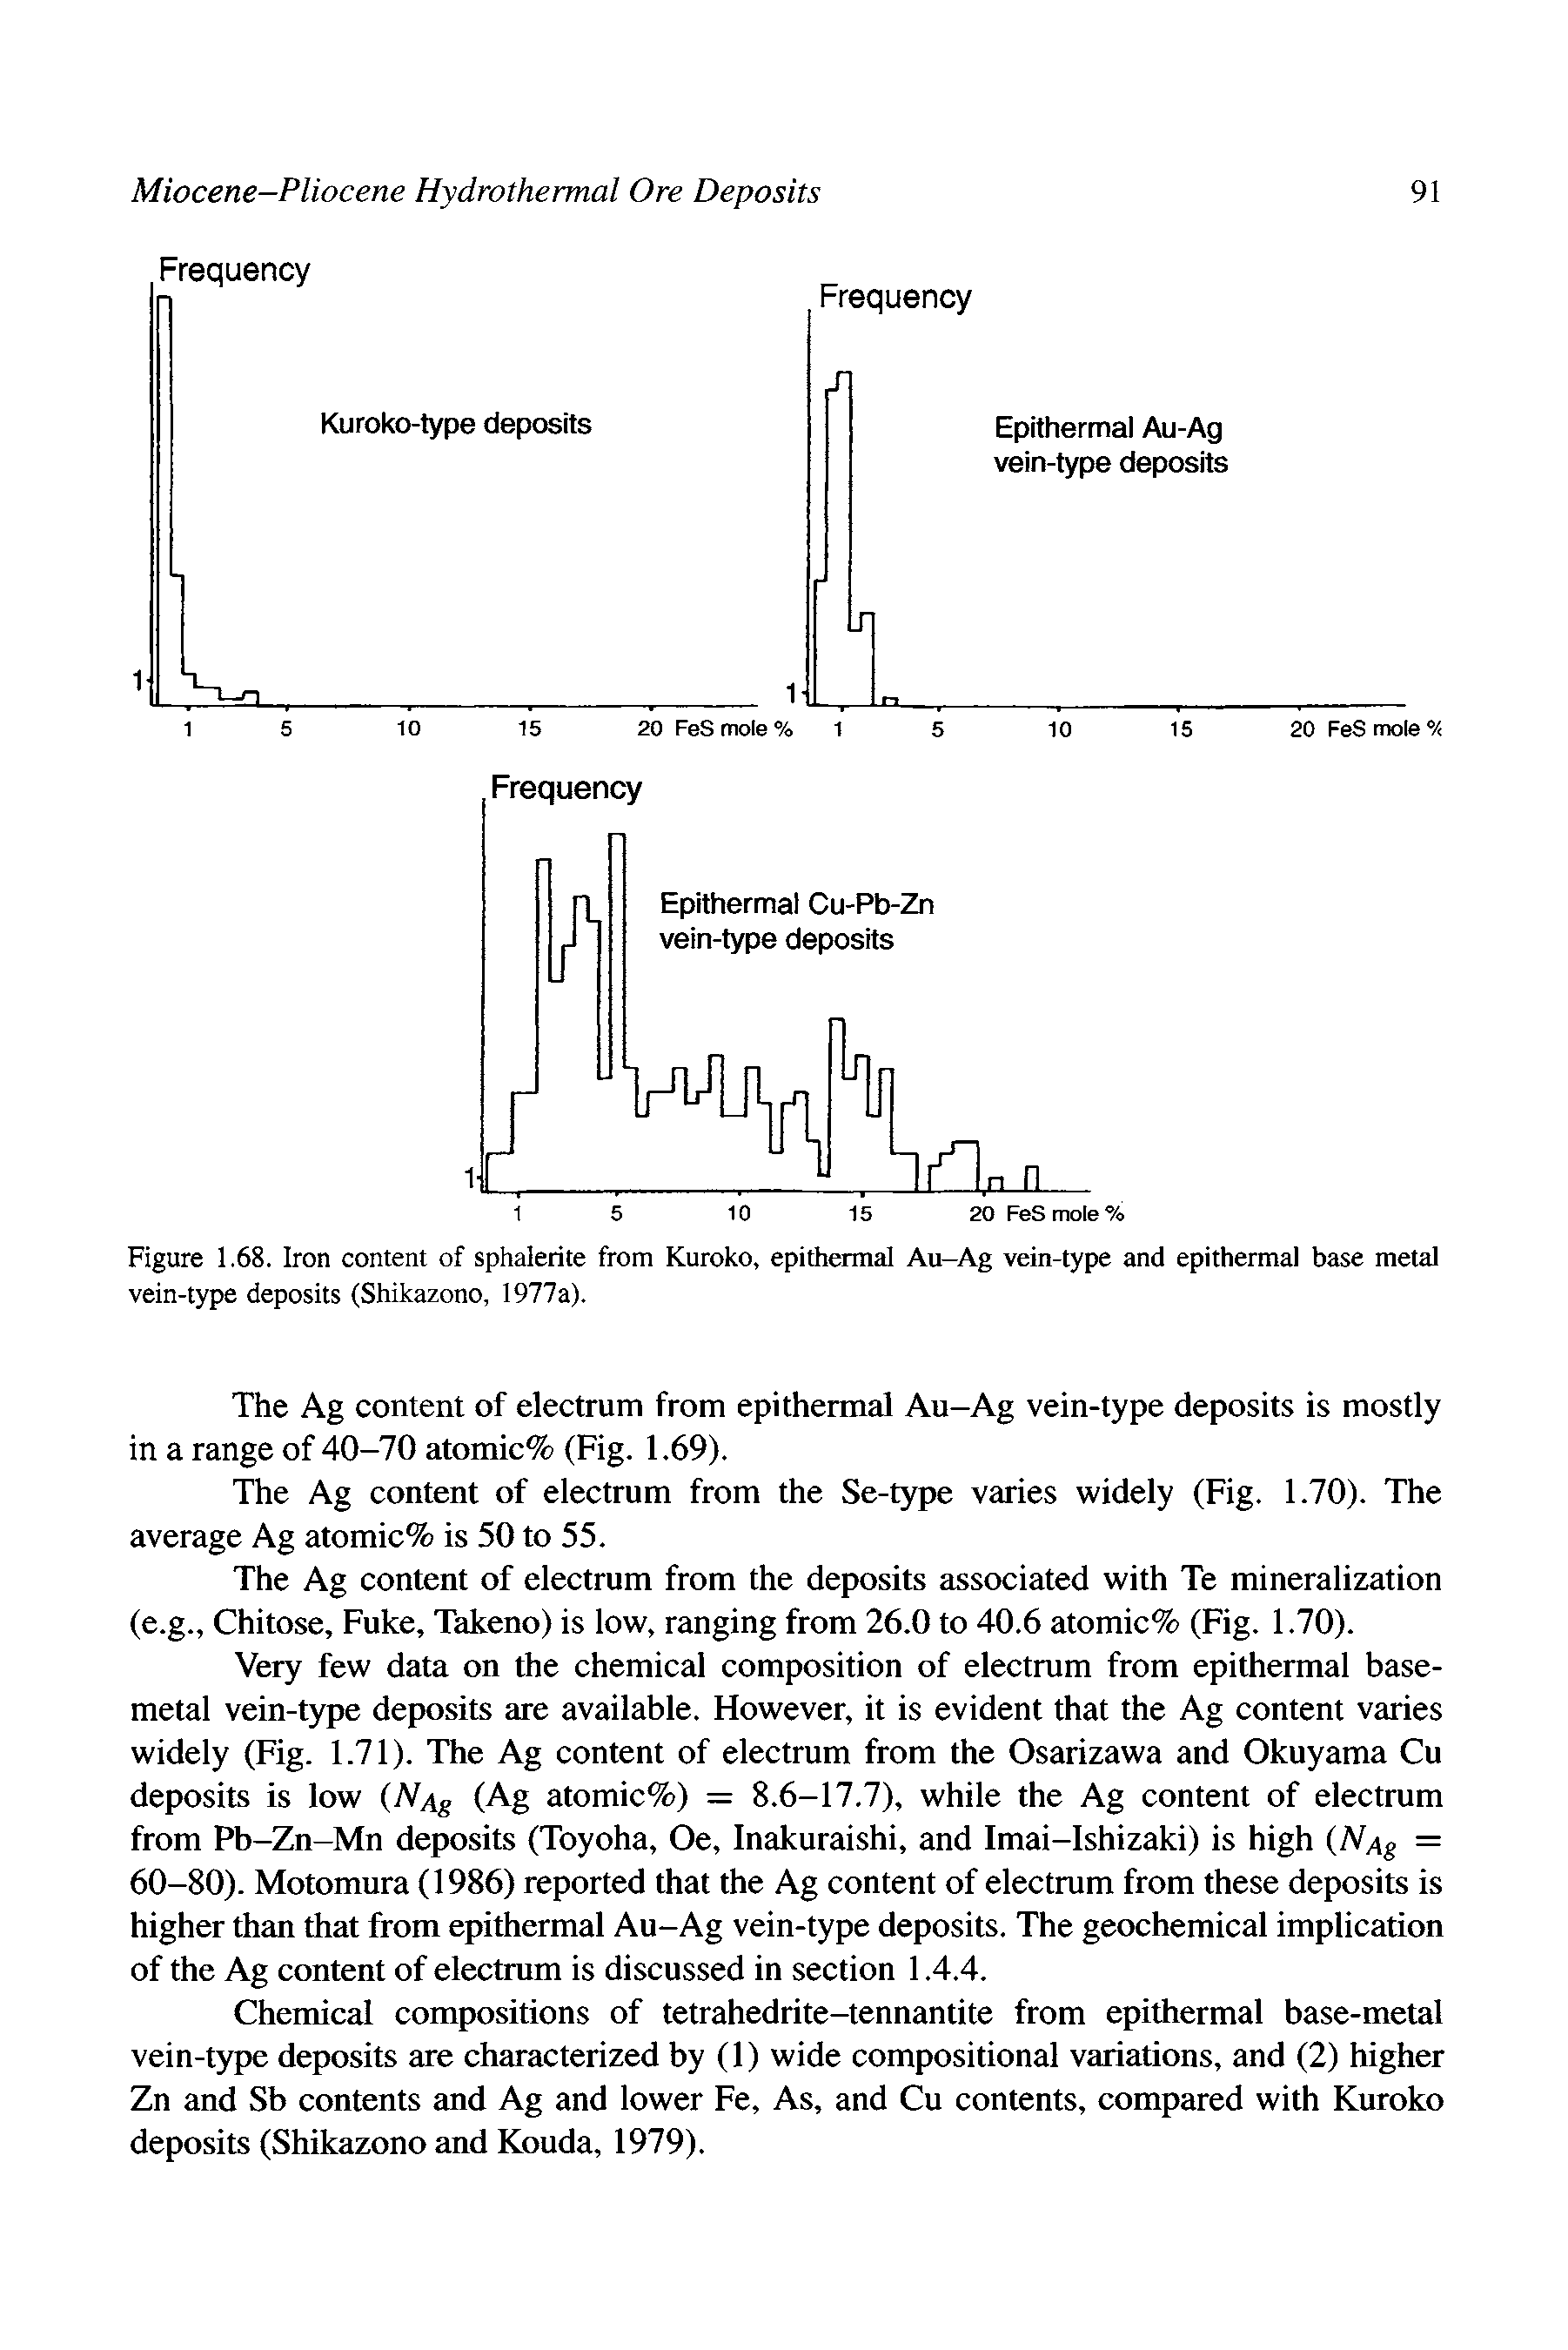 Figure 1.68. Iron content of sphalerite from Kuroko, epithermal Au-Ag vein-type and epithermal base metal vein-type deposits (Shikazono, 1977a).